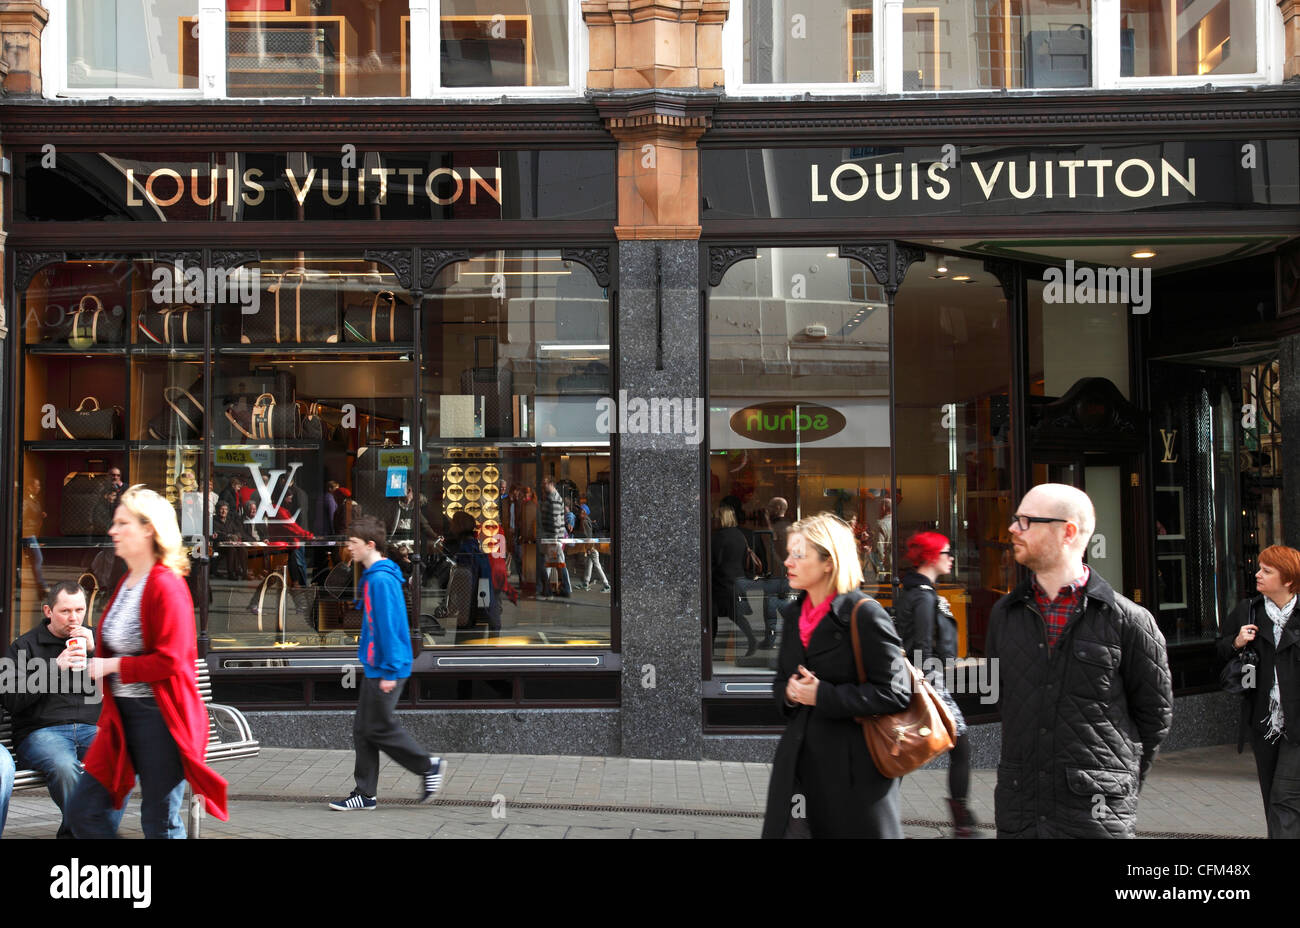 Louis Vuitton Leeds store, United Kingdom